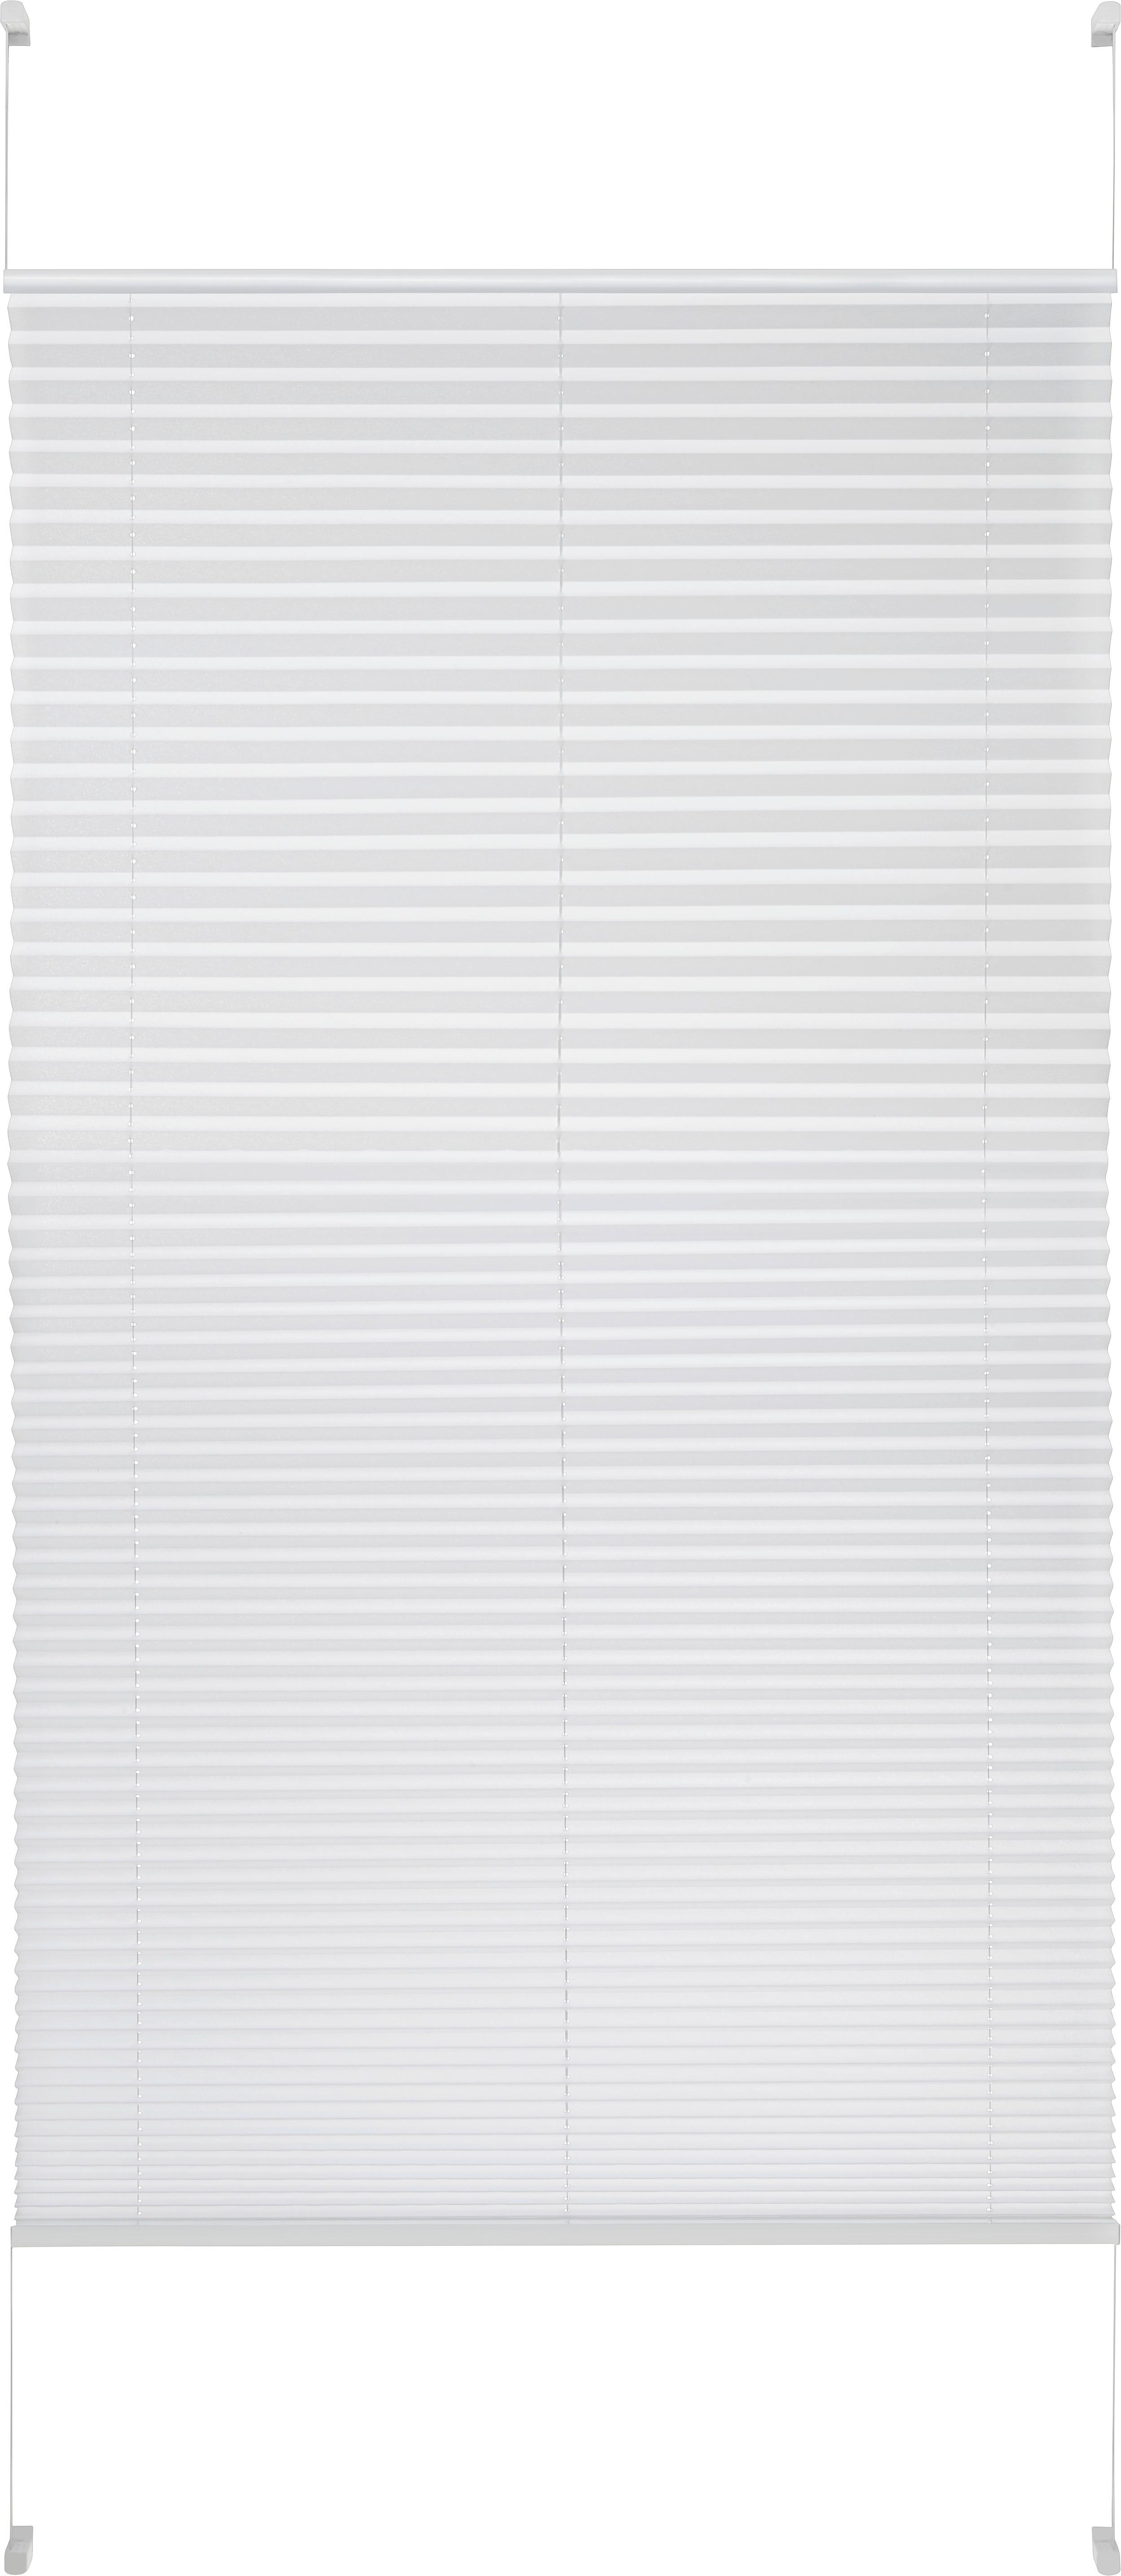 Plissee Light in Weiss ca. 90x210cm - Weiss, Textil (90/210cm) - Premium Living